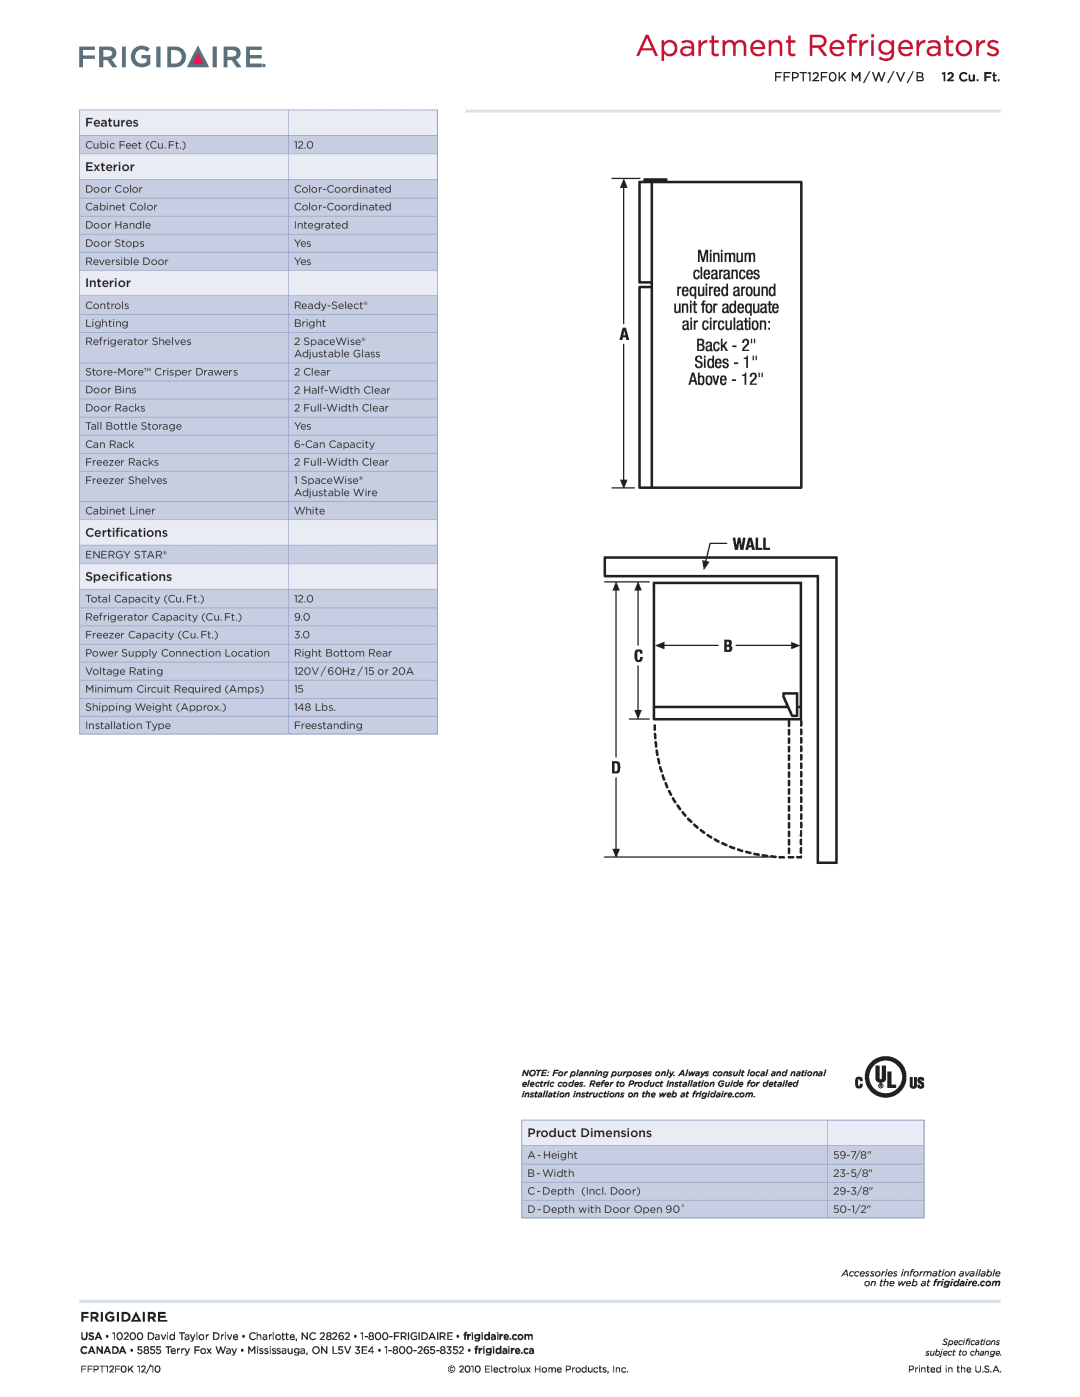 Frigidaire FFPT12F0K Minimum clearances, Aair circulation Back - Sides - Above, Apartment Refrigerators, Wall, Features 